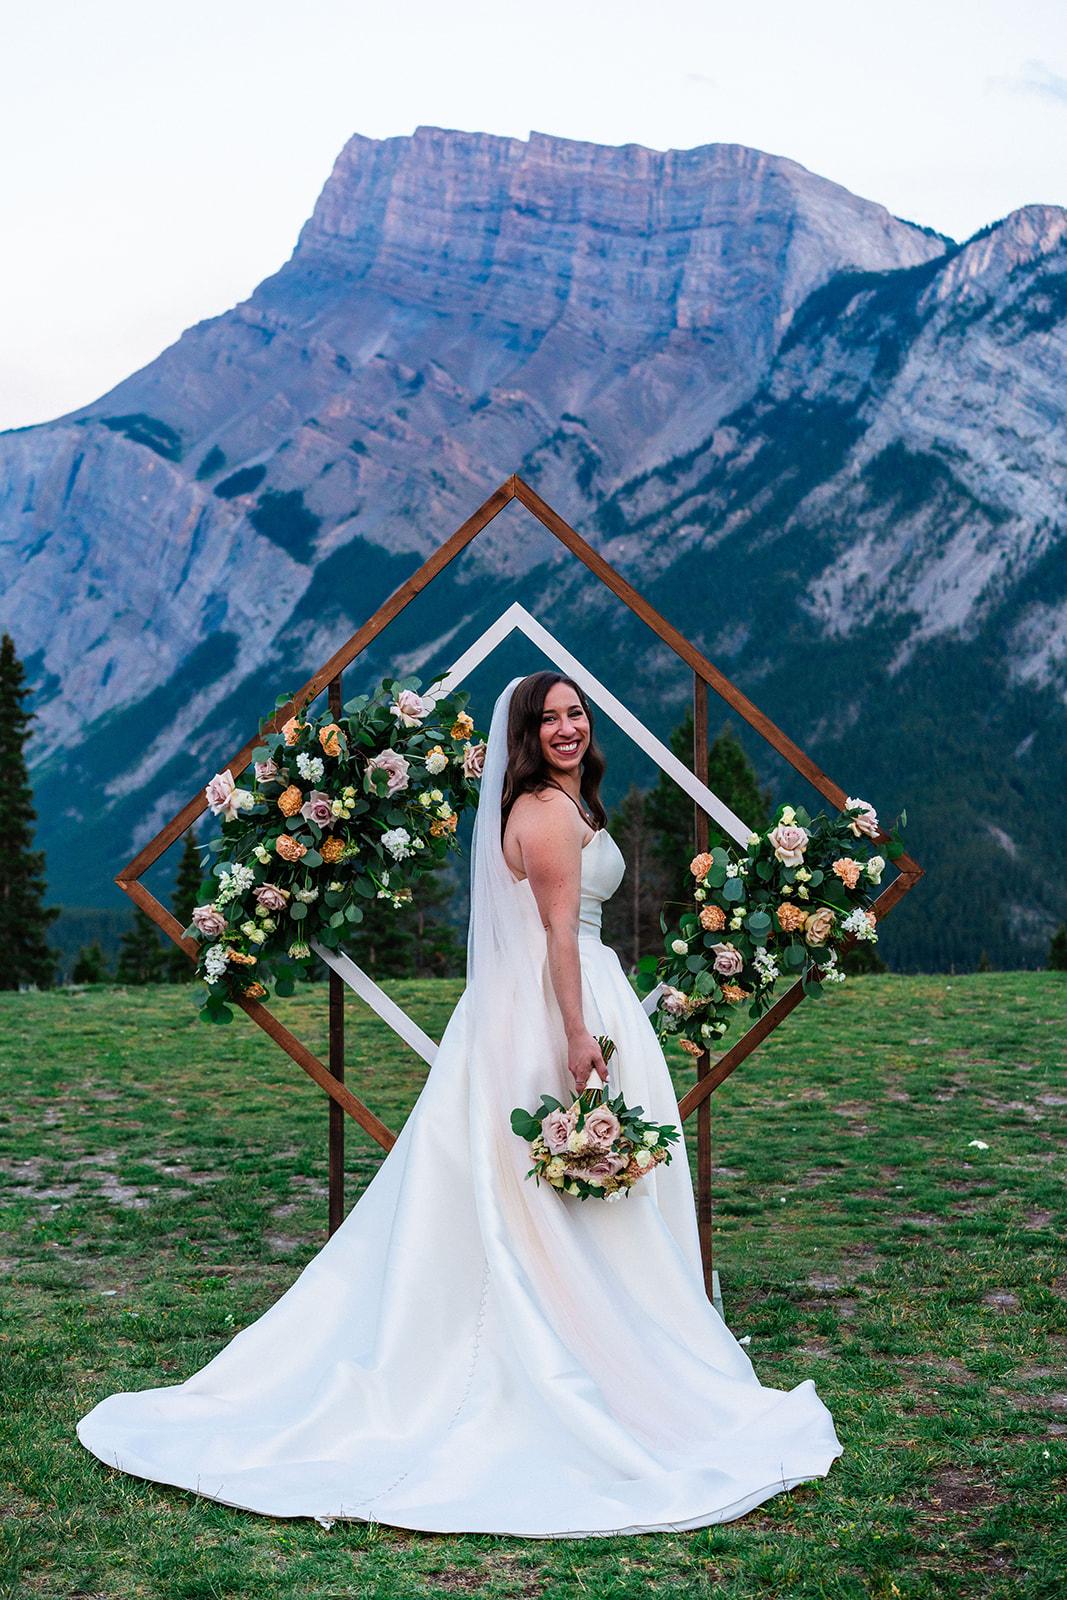 Stunning bride in a strapless wedding dress in Banff, Canada